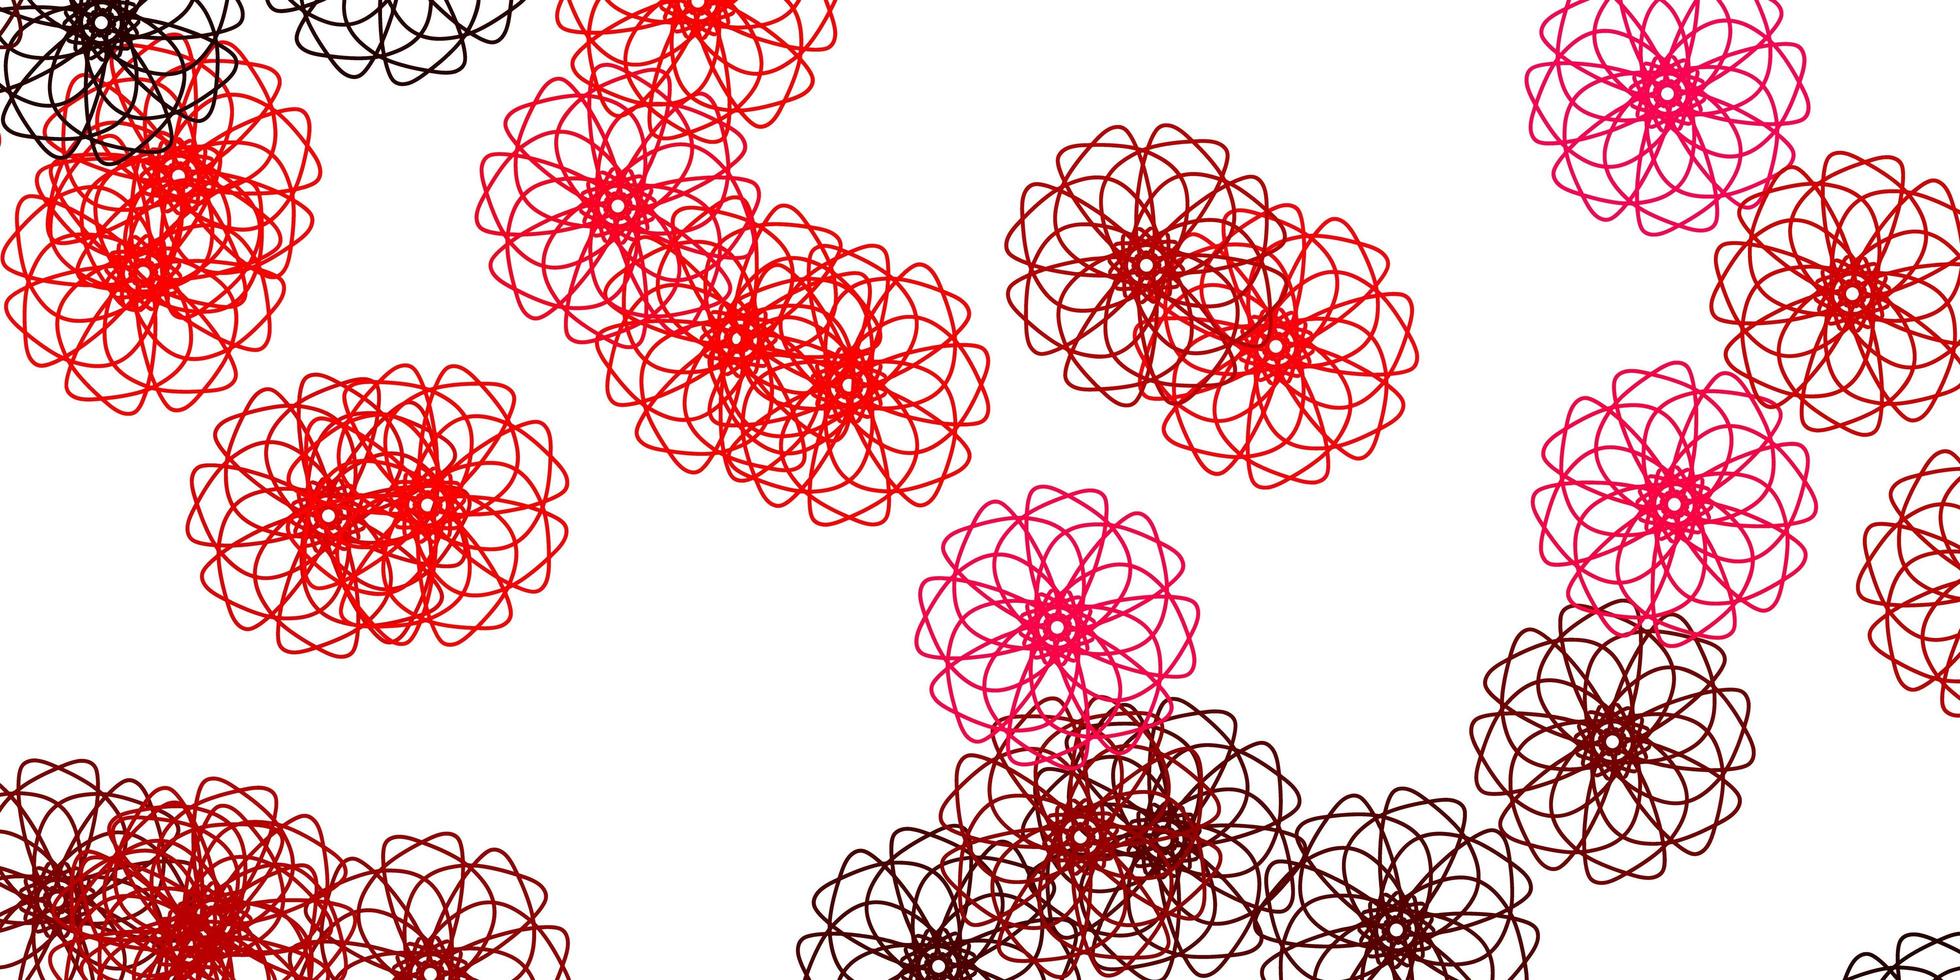 ljusrosa vektor doodle bakgrund med blommor.